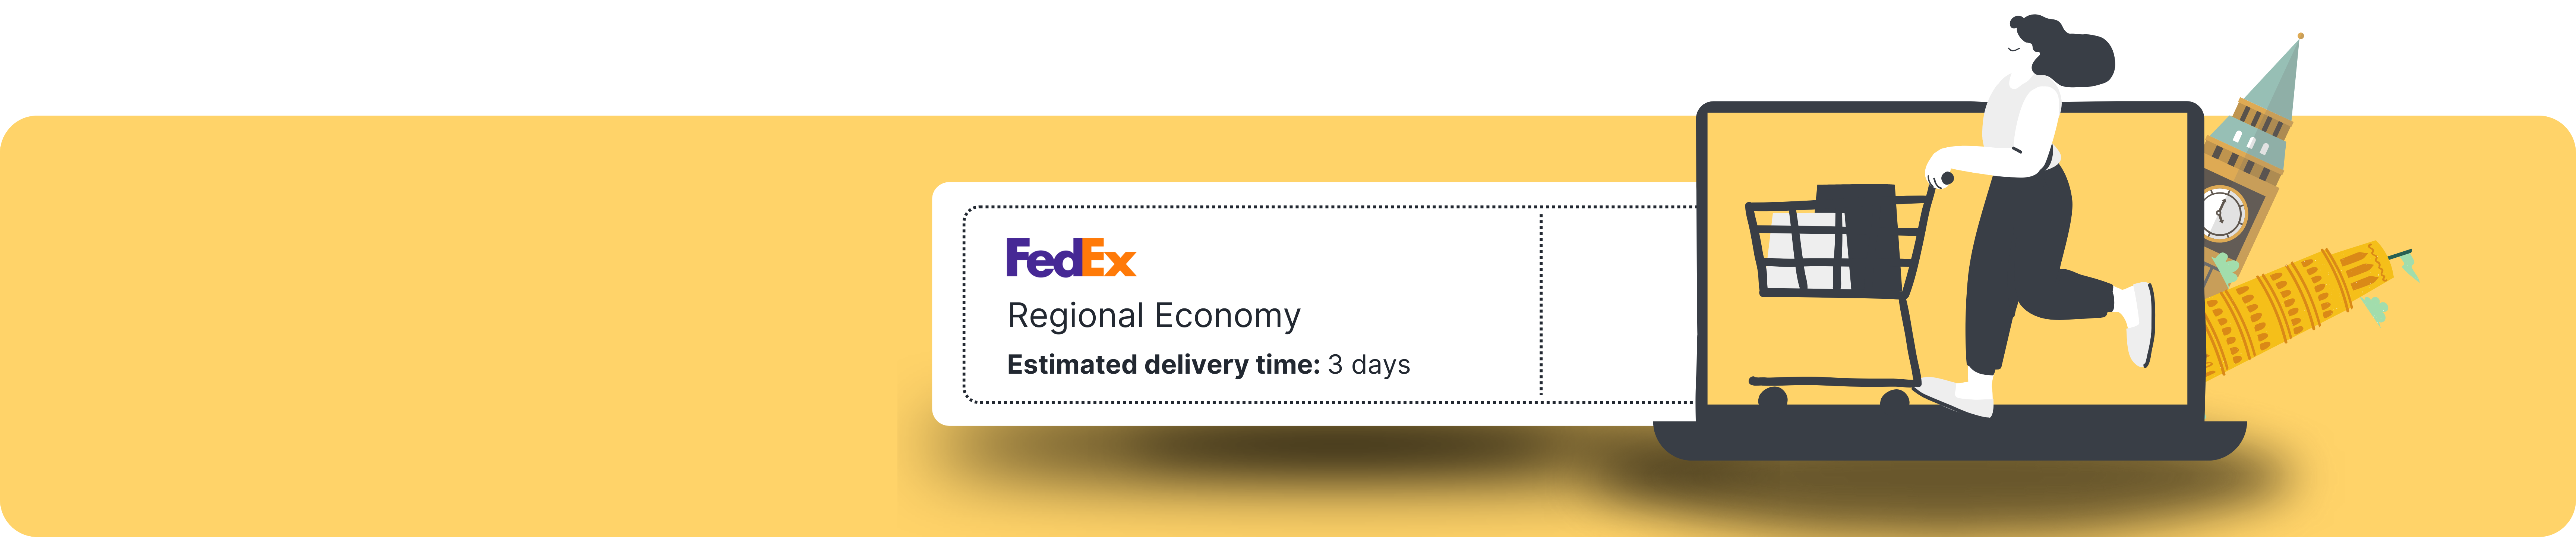 Fedex Regional Economy